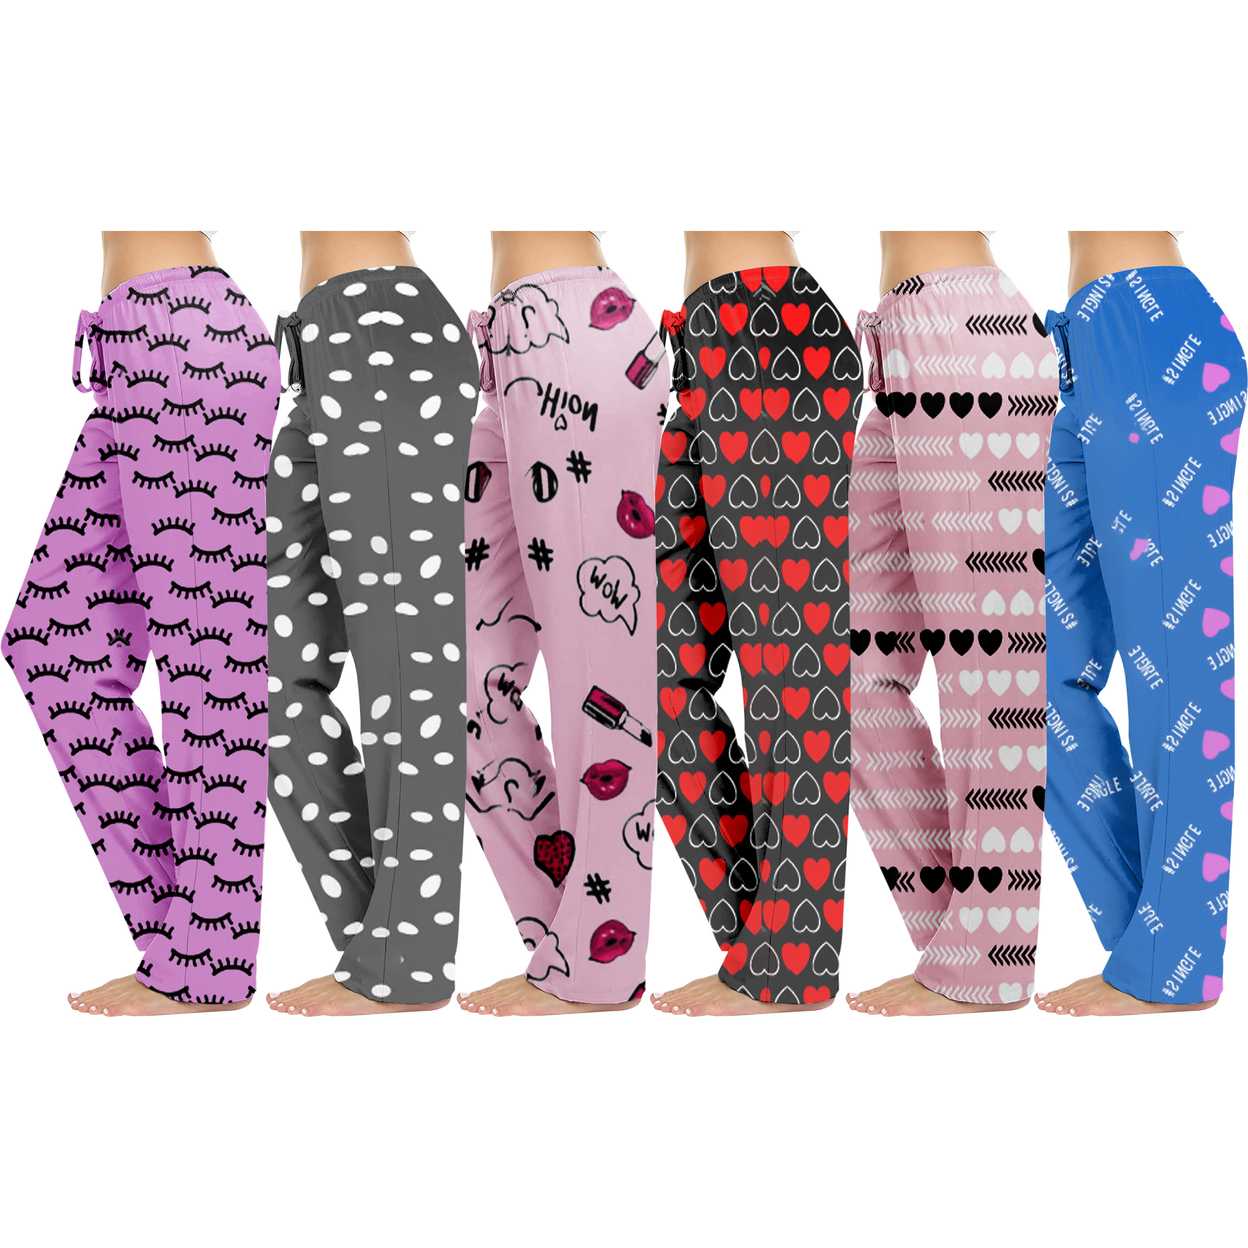 4-Pack: Women's Casual Fun Printed Lightweight Lounge Terry Knit Pajama Bottom Pants - Small, Animal